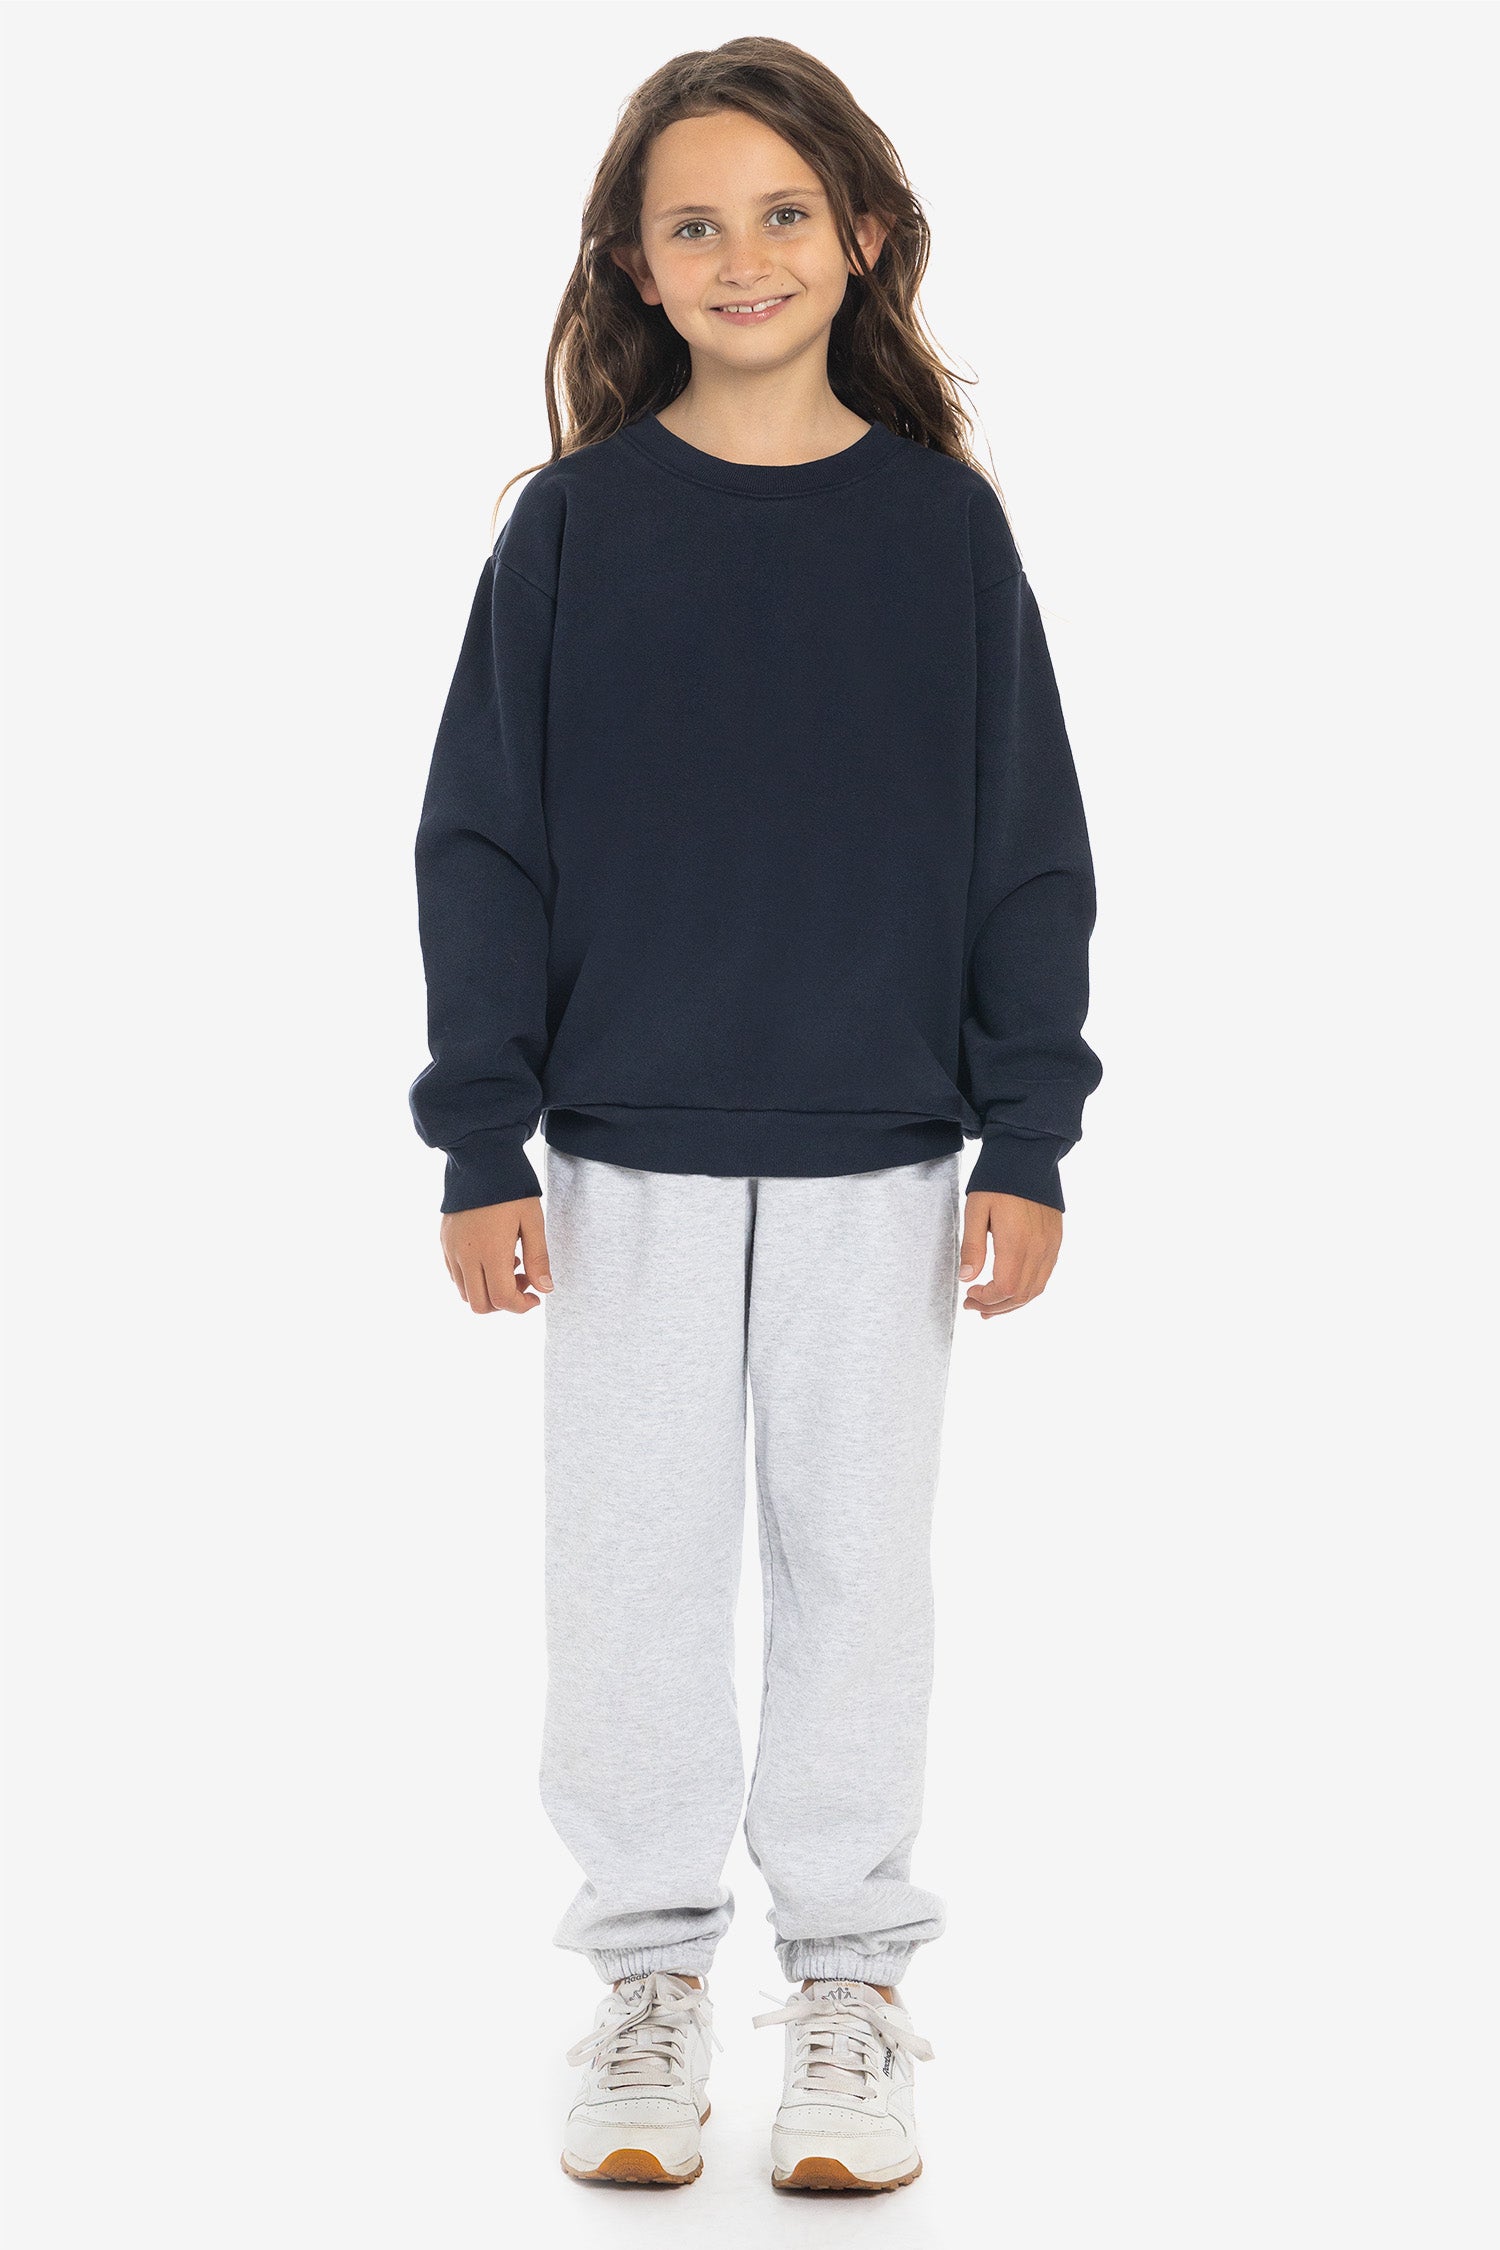  Hanes Womens ComfortBlend Fleece Sweatpants (Medium, Navy  Heather) : Clothing, Shoes & Jewelry